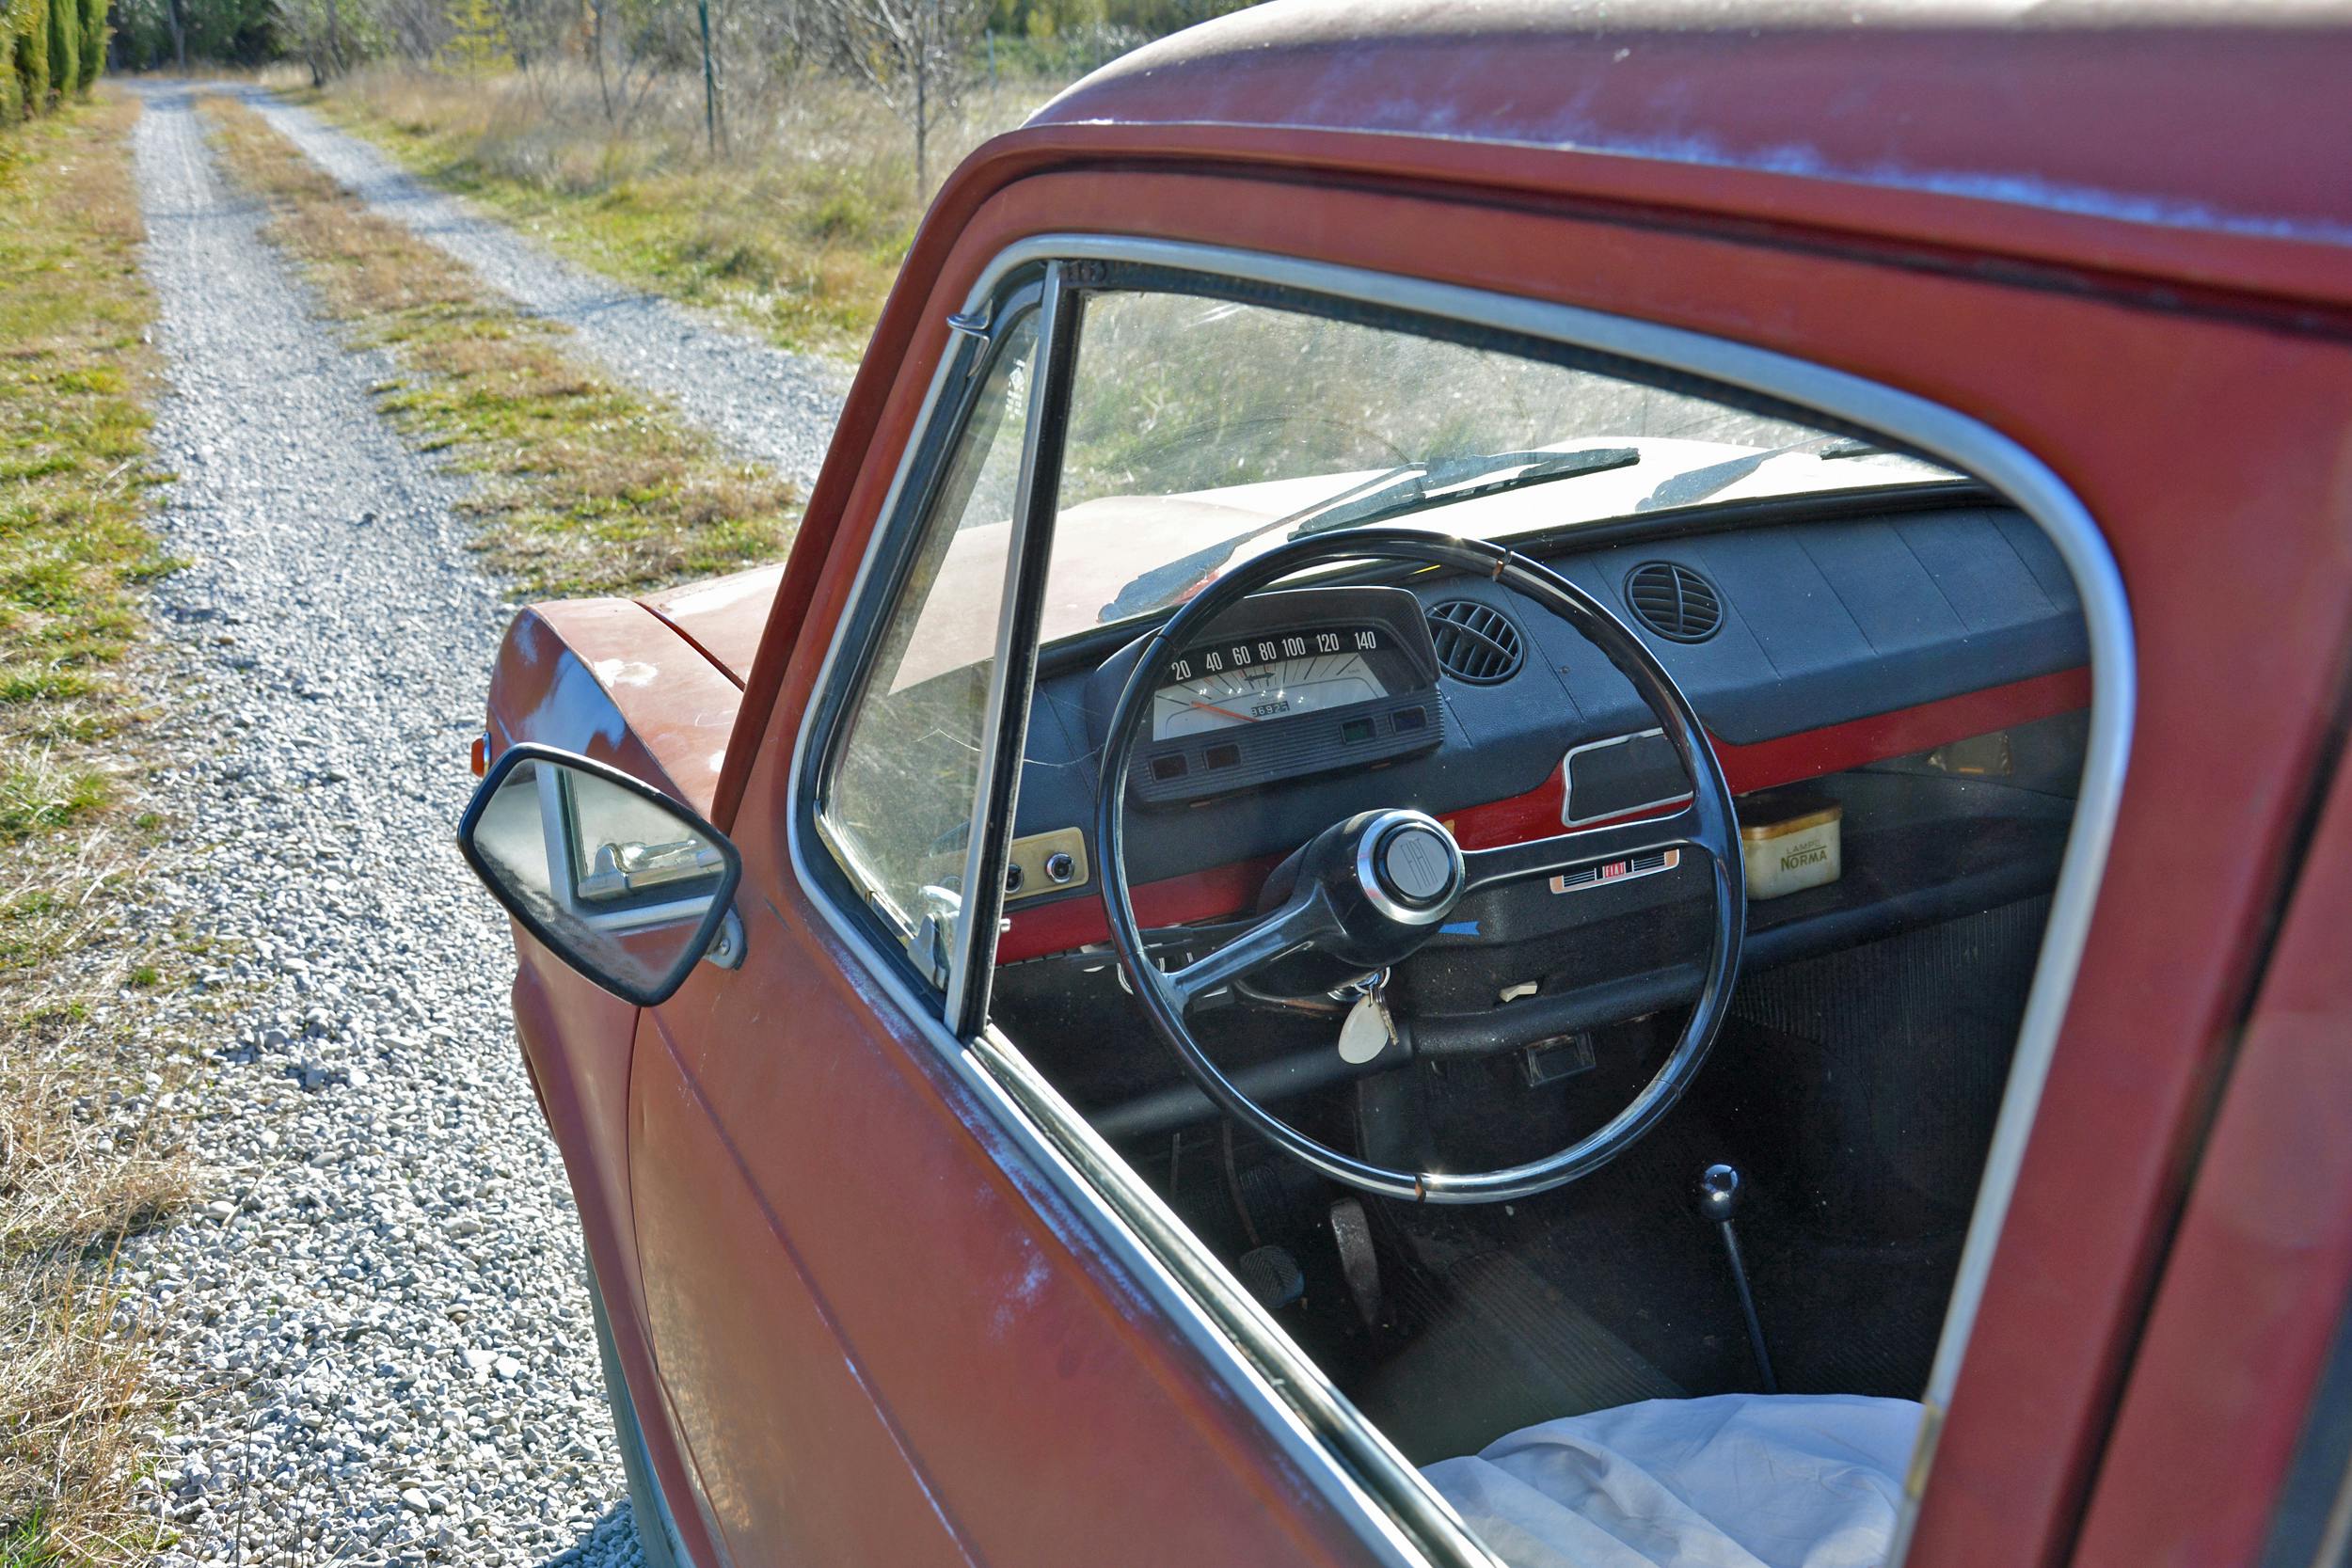 1971 Fiat 850 Interior View Through Window